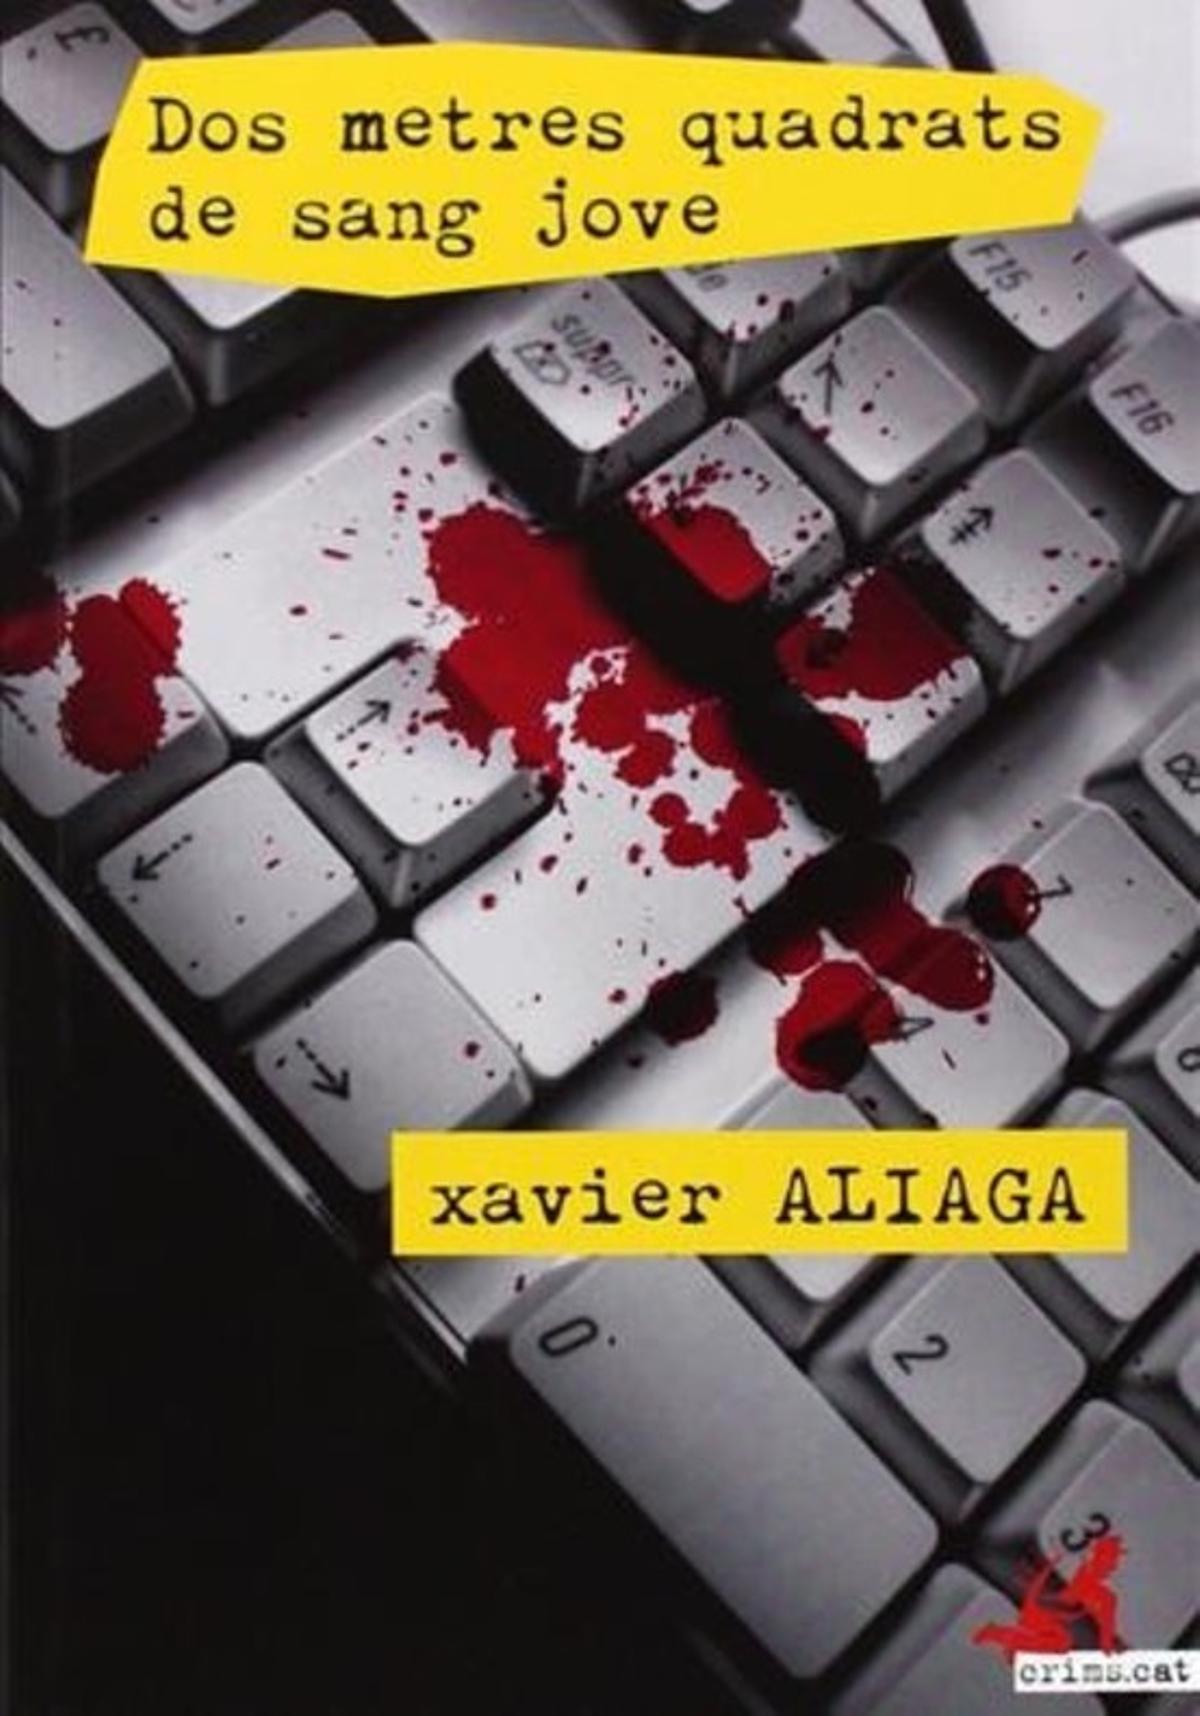 ’Dos metres quadrats de sang jove’, de Xavier Aliaga.